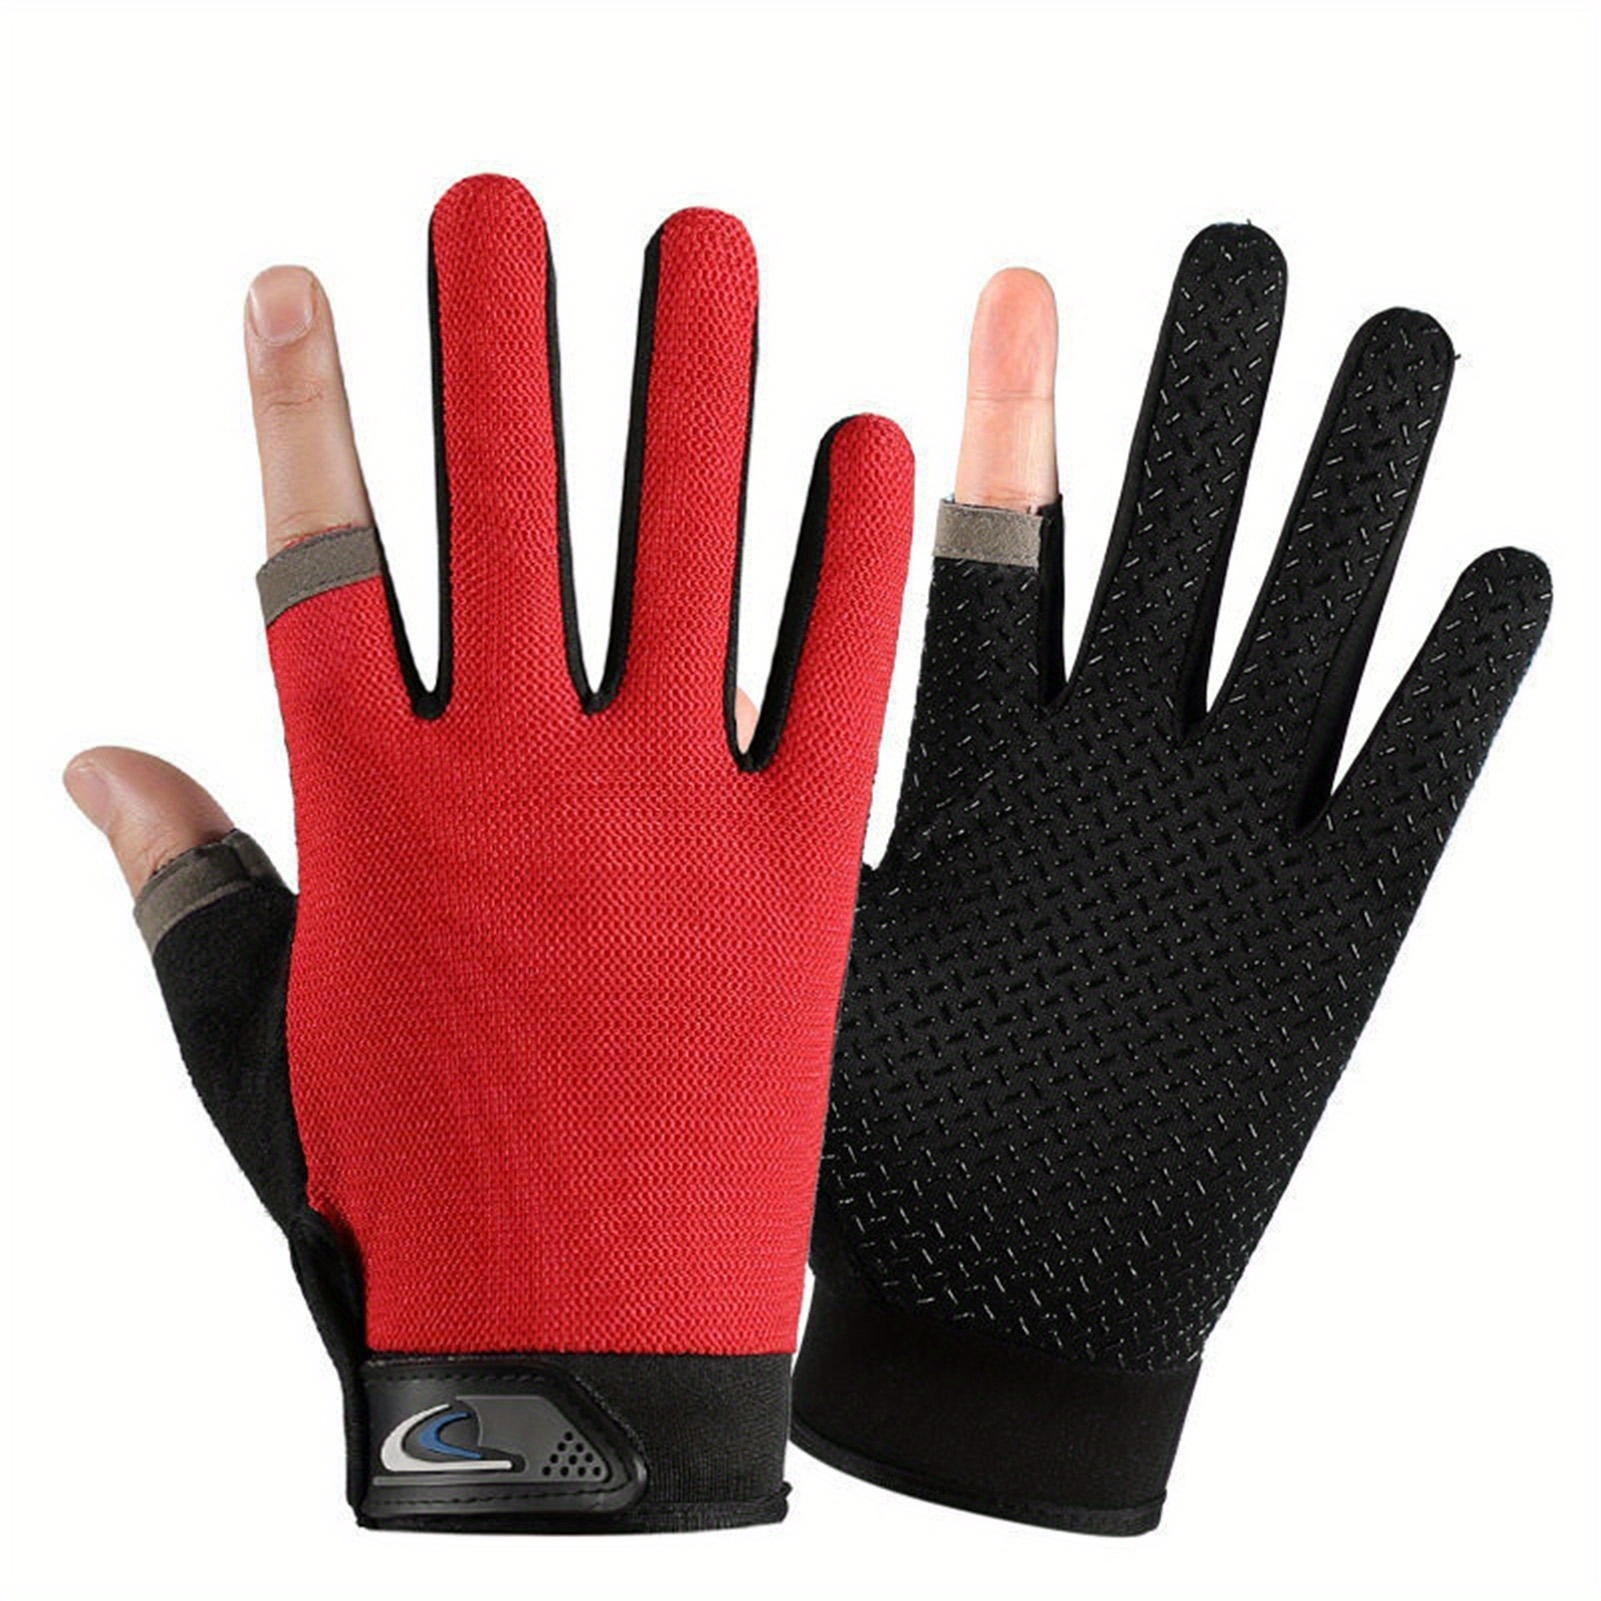 Minfishing 2 PCS Rubber Fishing Gloves Insulated Anti-slip Gloves